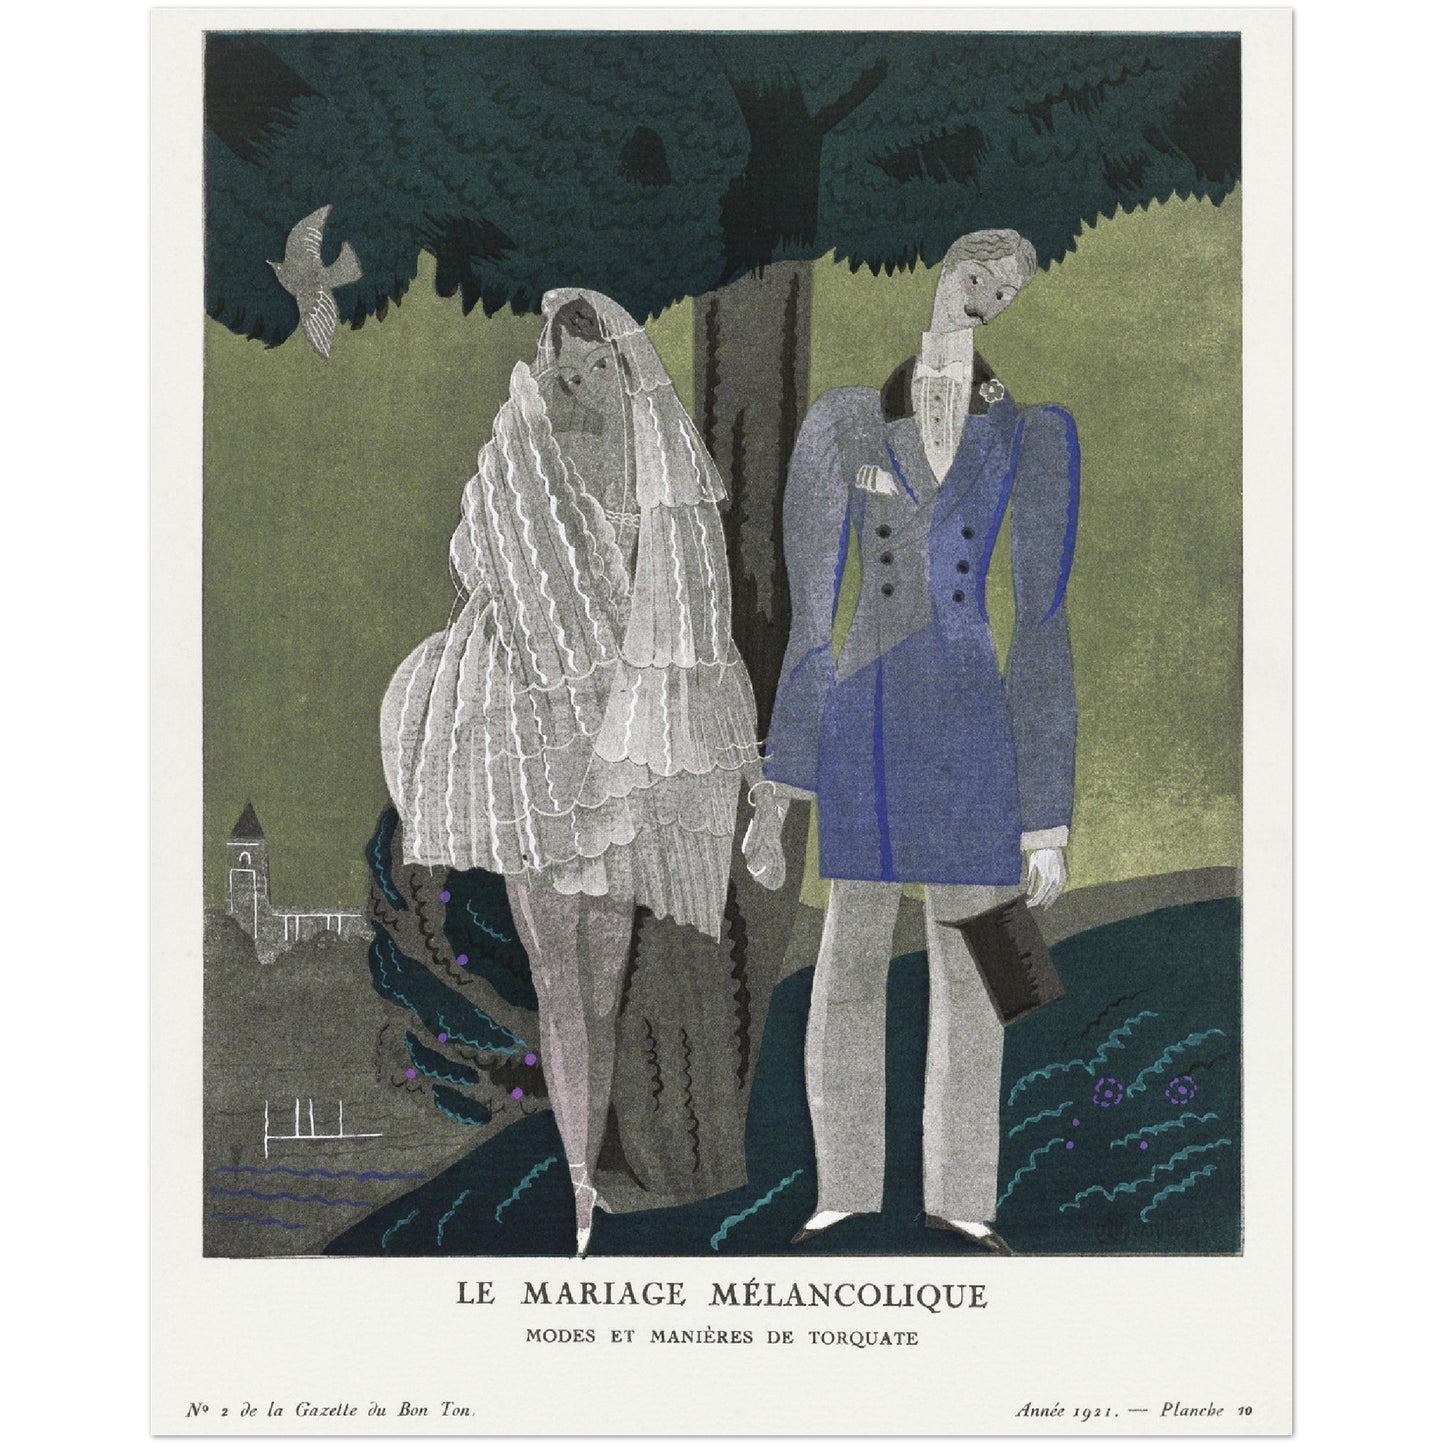 Poster - he melancholy marriage, Modes et Manières de Torquate (1921) Charles Martin